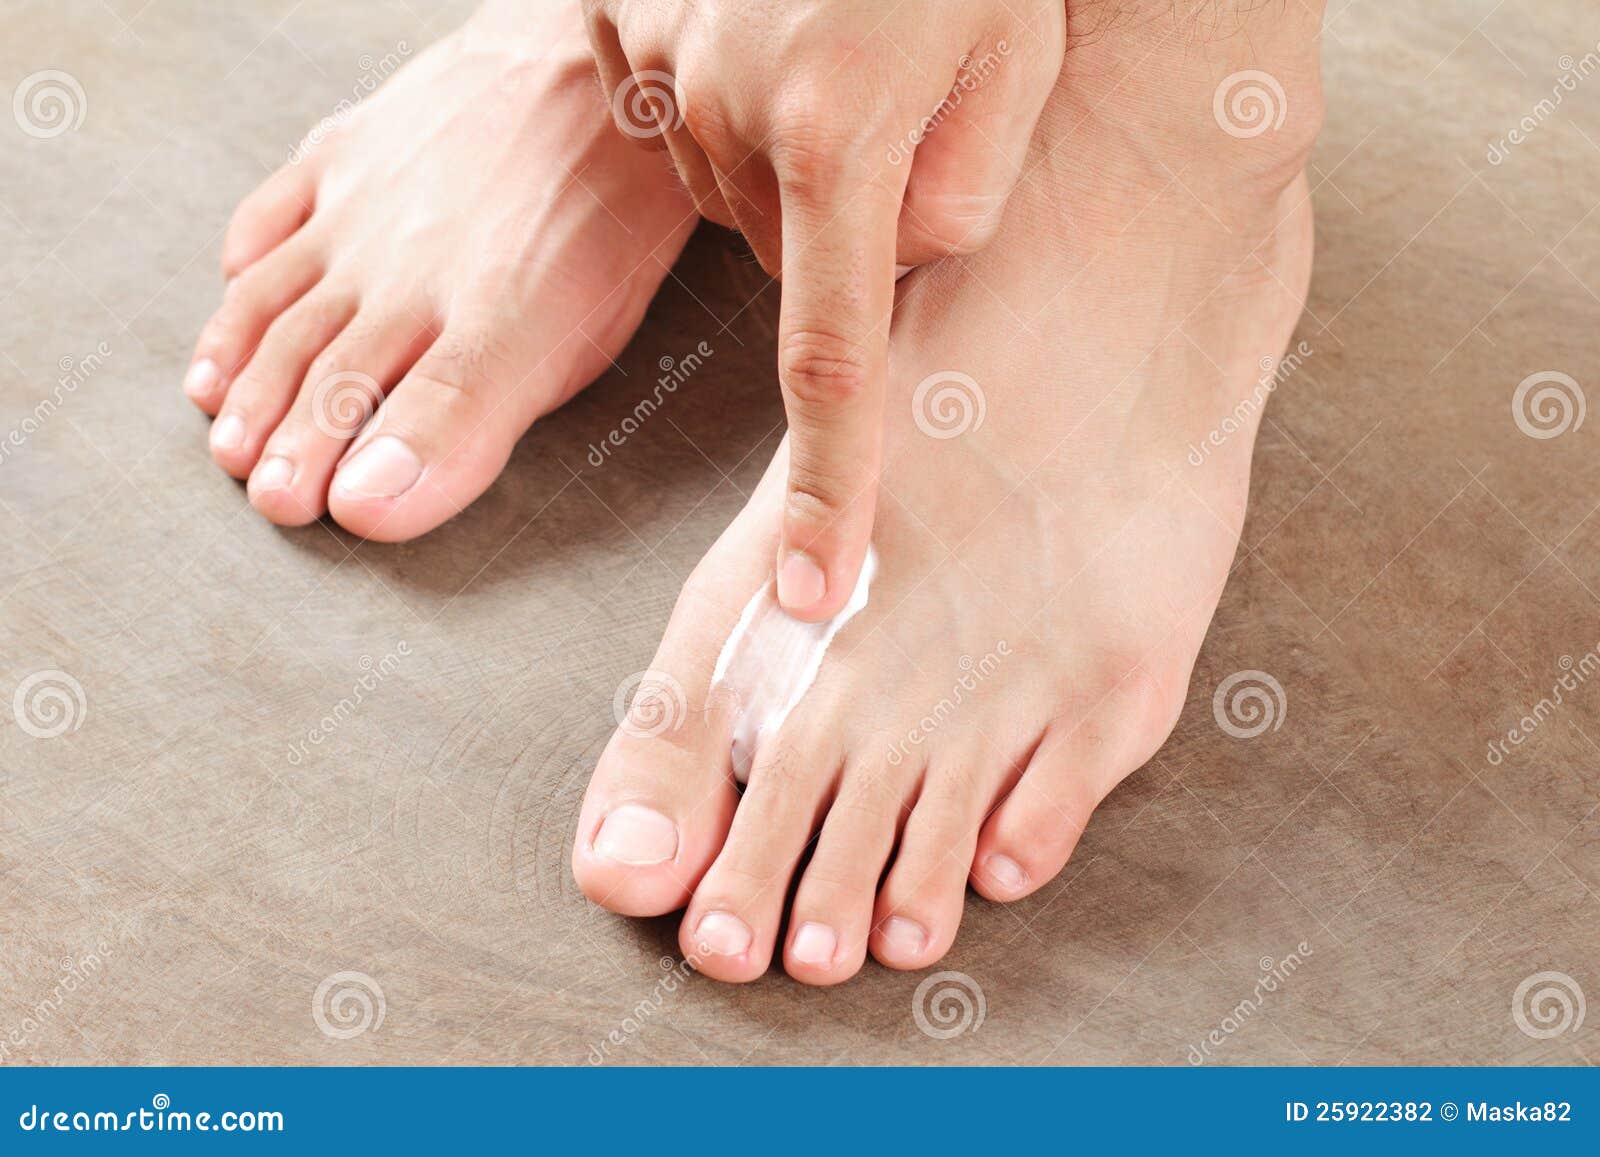 athlete's foot treatment